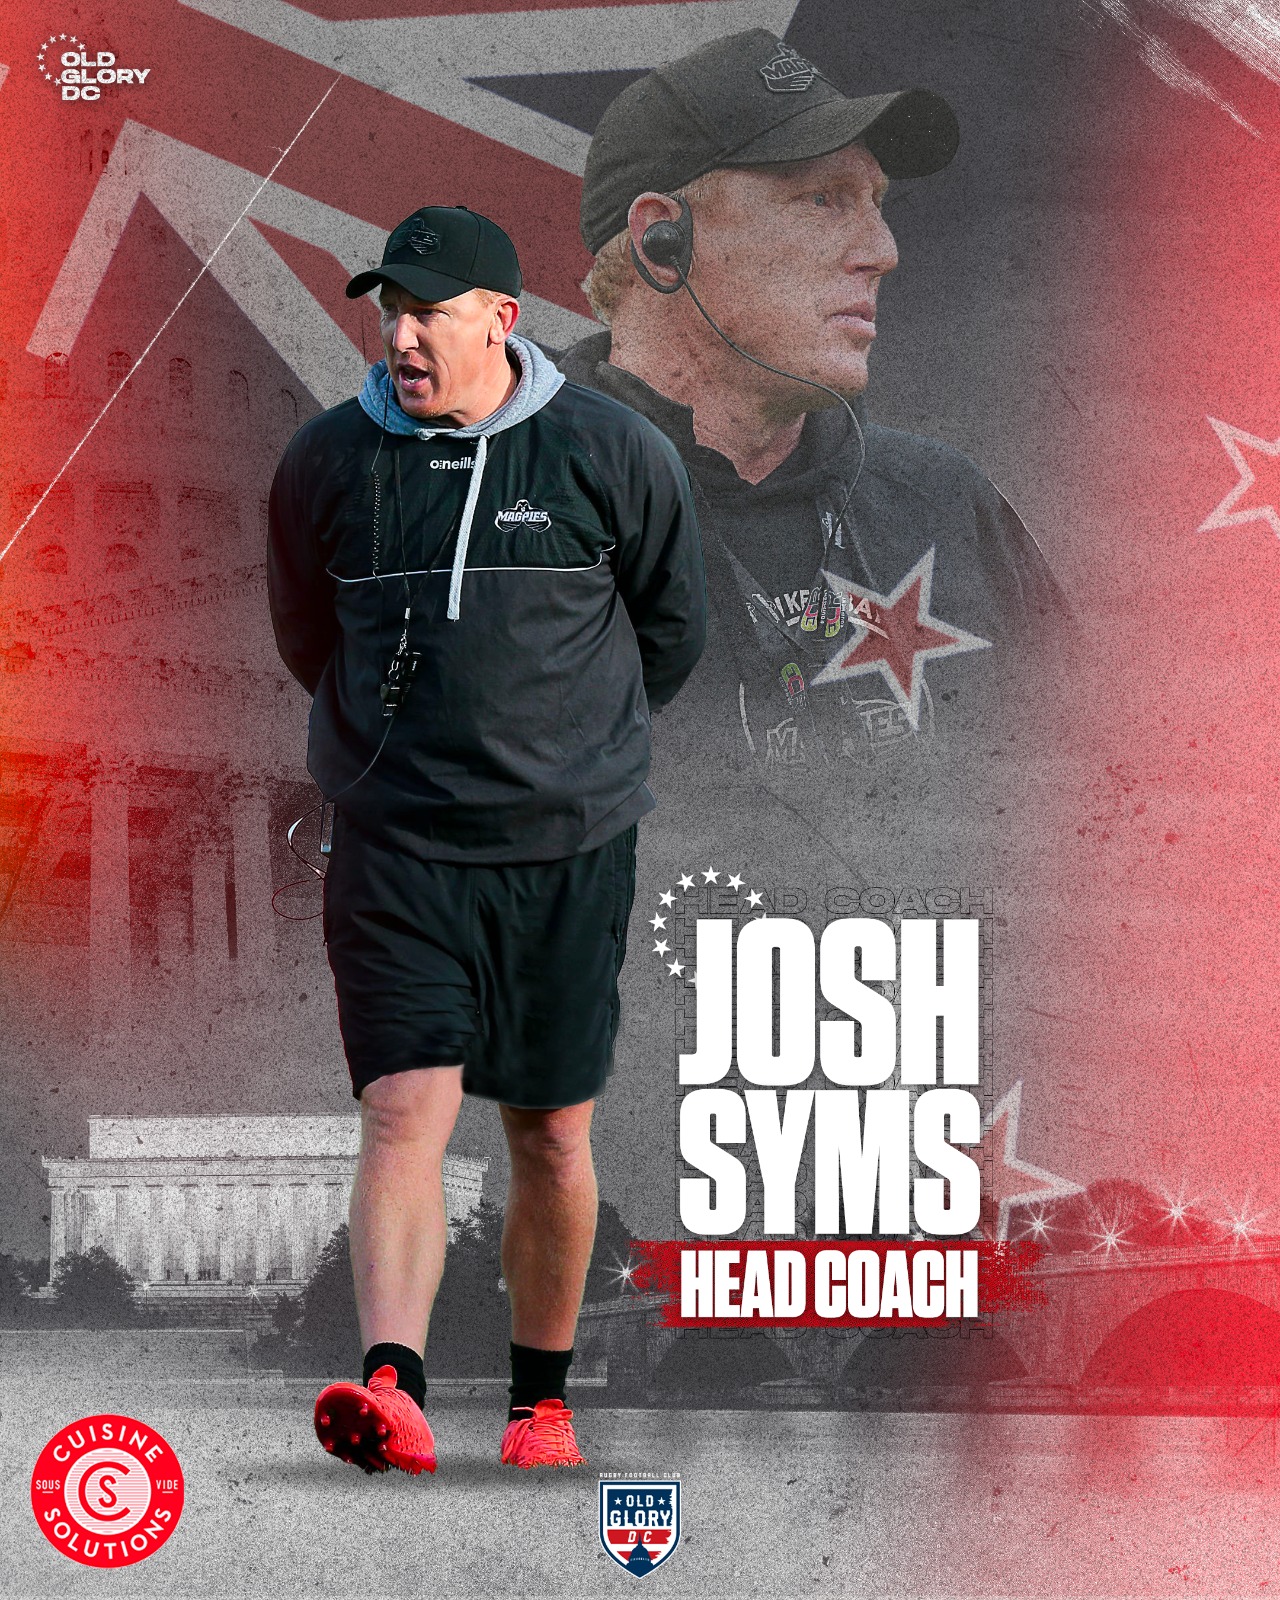 Old Glory DC Announces Joshua "Josh" Syms as Head Coach : Old Glory DC